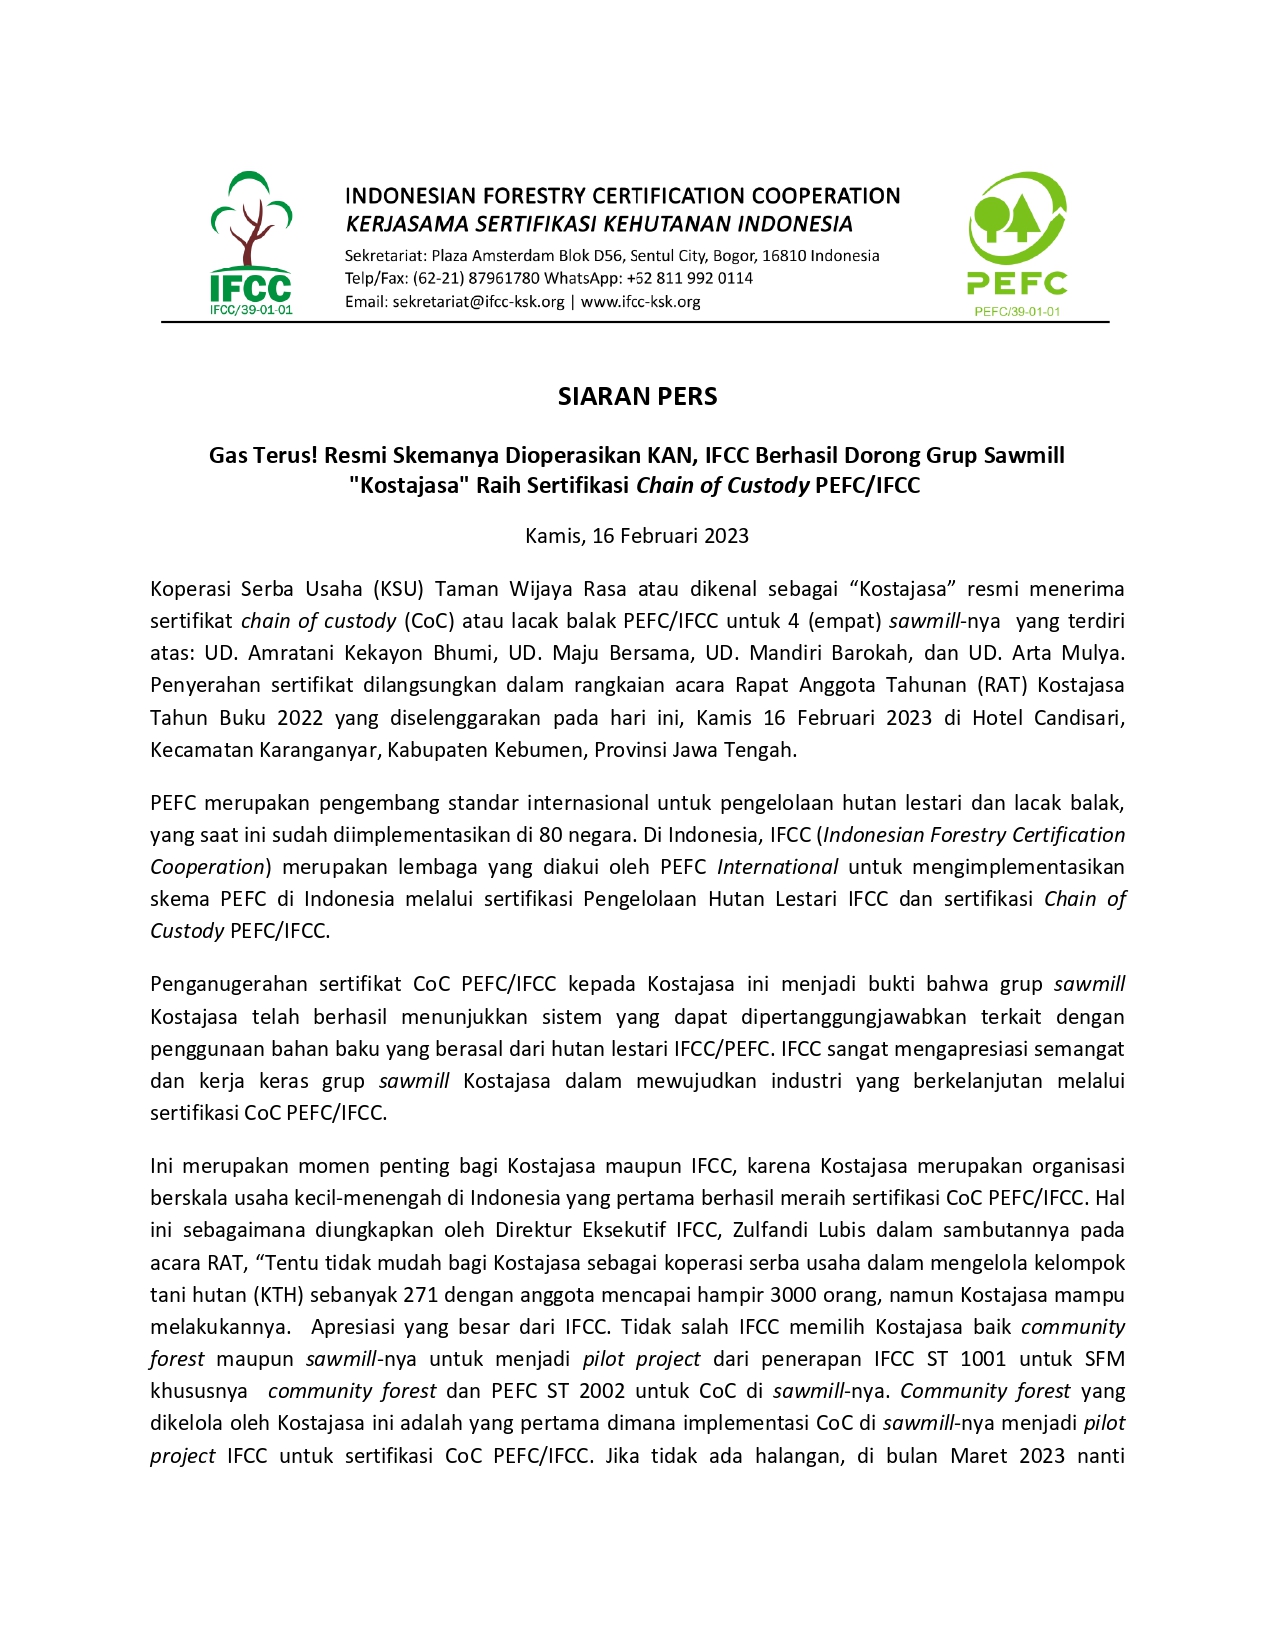 230216 - Media Release_Kostajasa Sawmill Raih CoC PEFC IFCC_revRW_page-0001.jpg